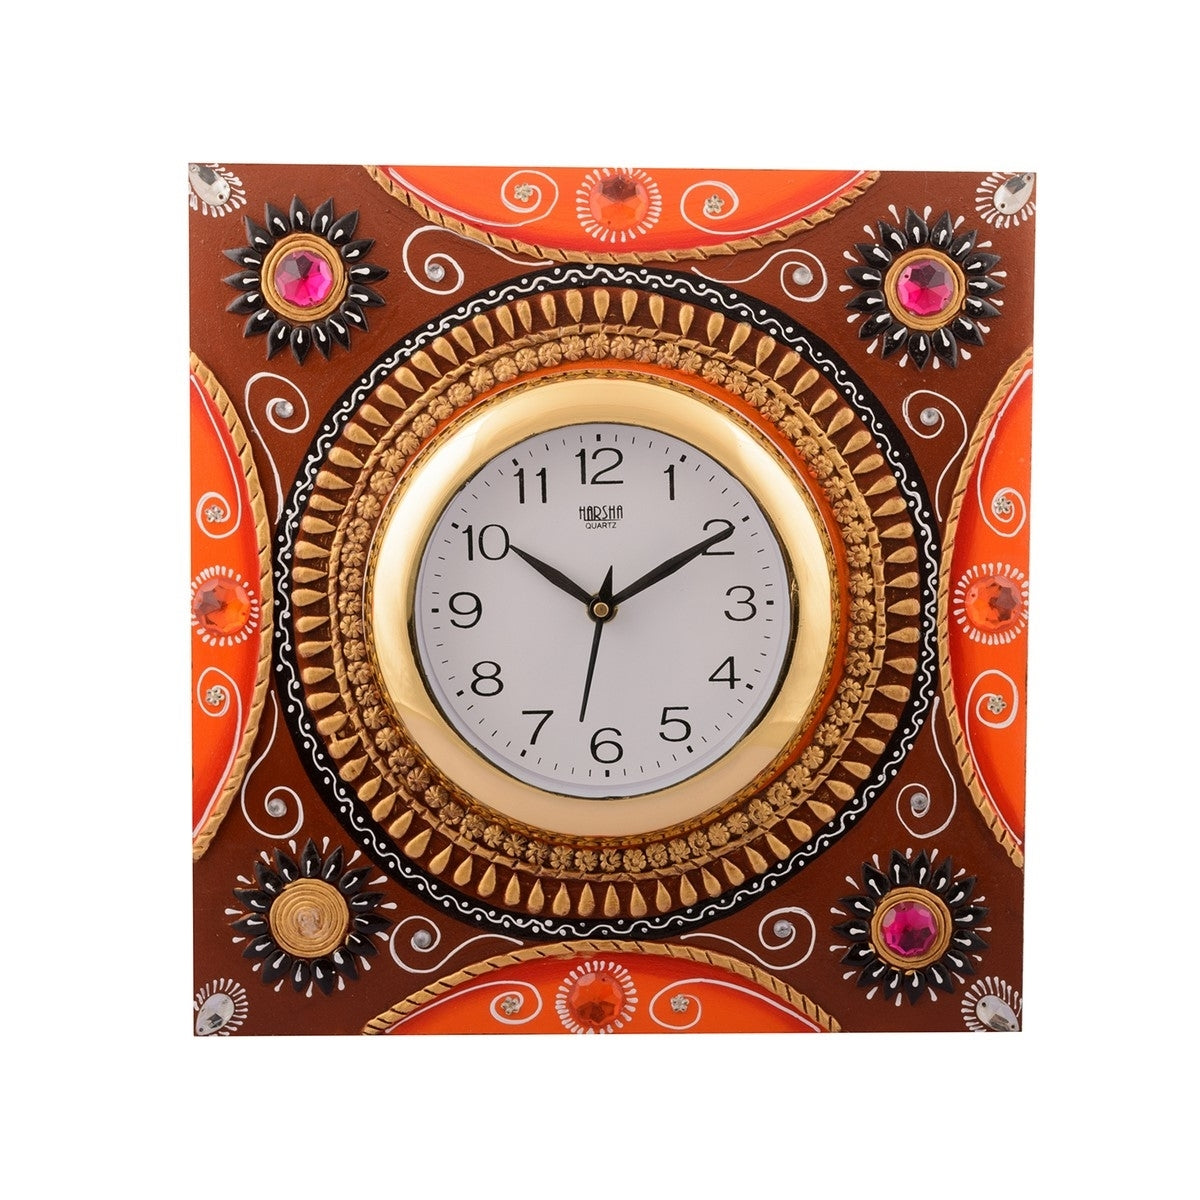 Wooden Papier Mache Rick Look Artistic Handcrafted Wall Clock